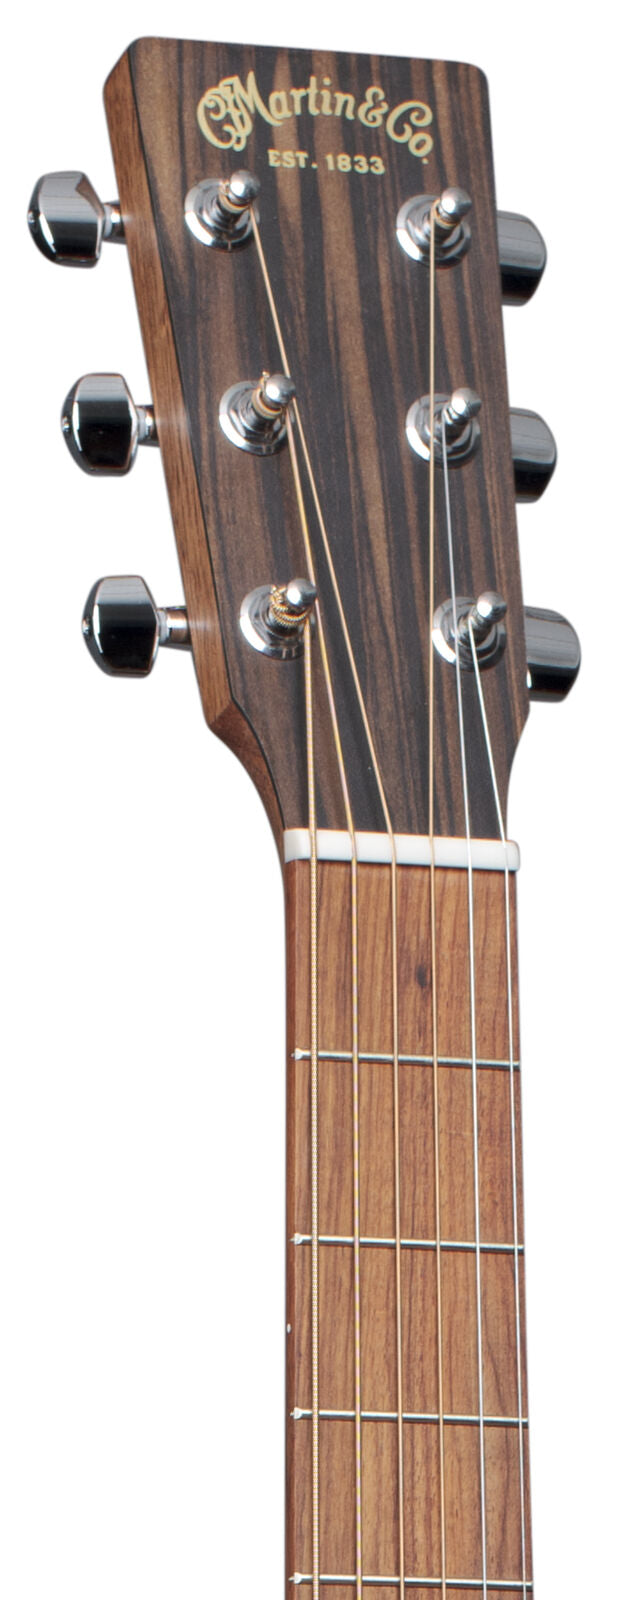 Martin D-X2E Acoustic electric guitar